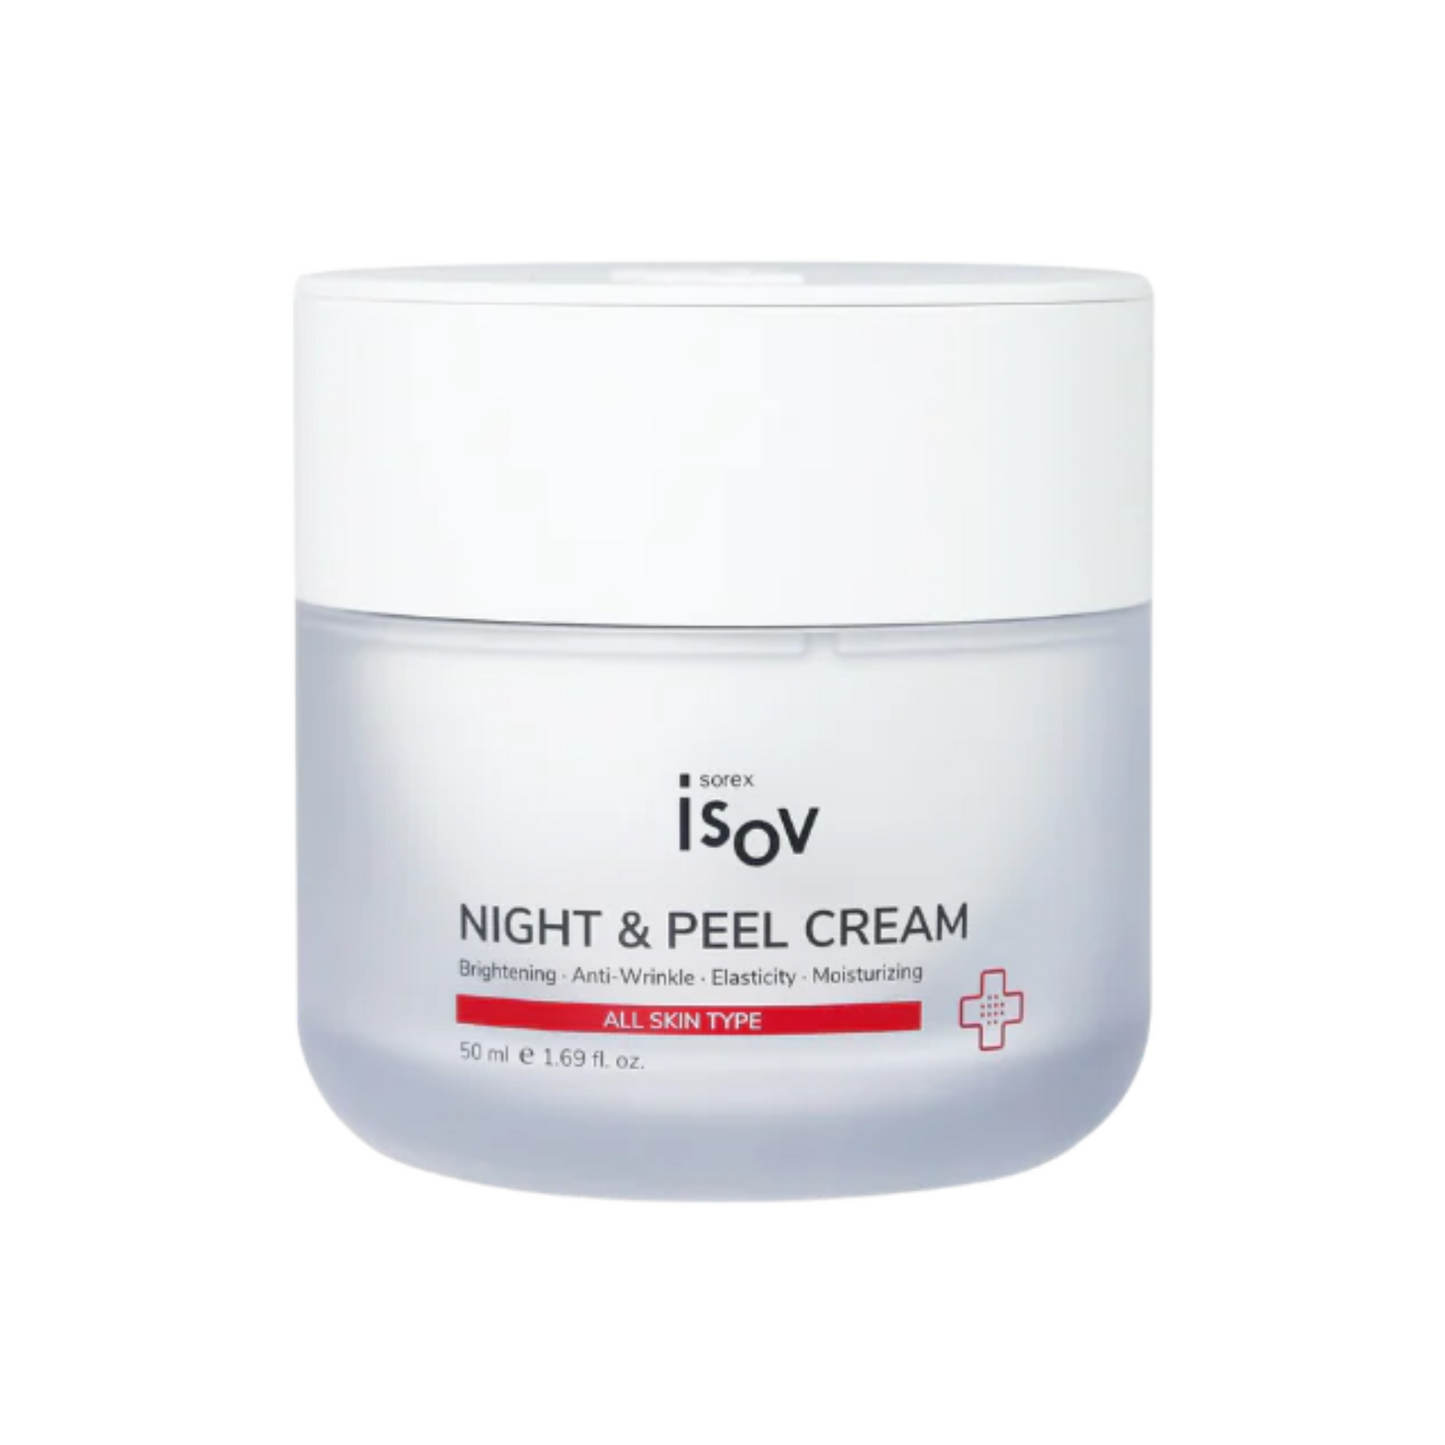 ISOV Night and Peel Cream